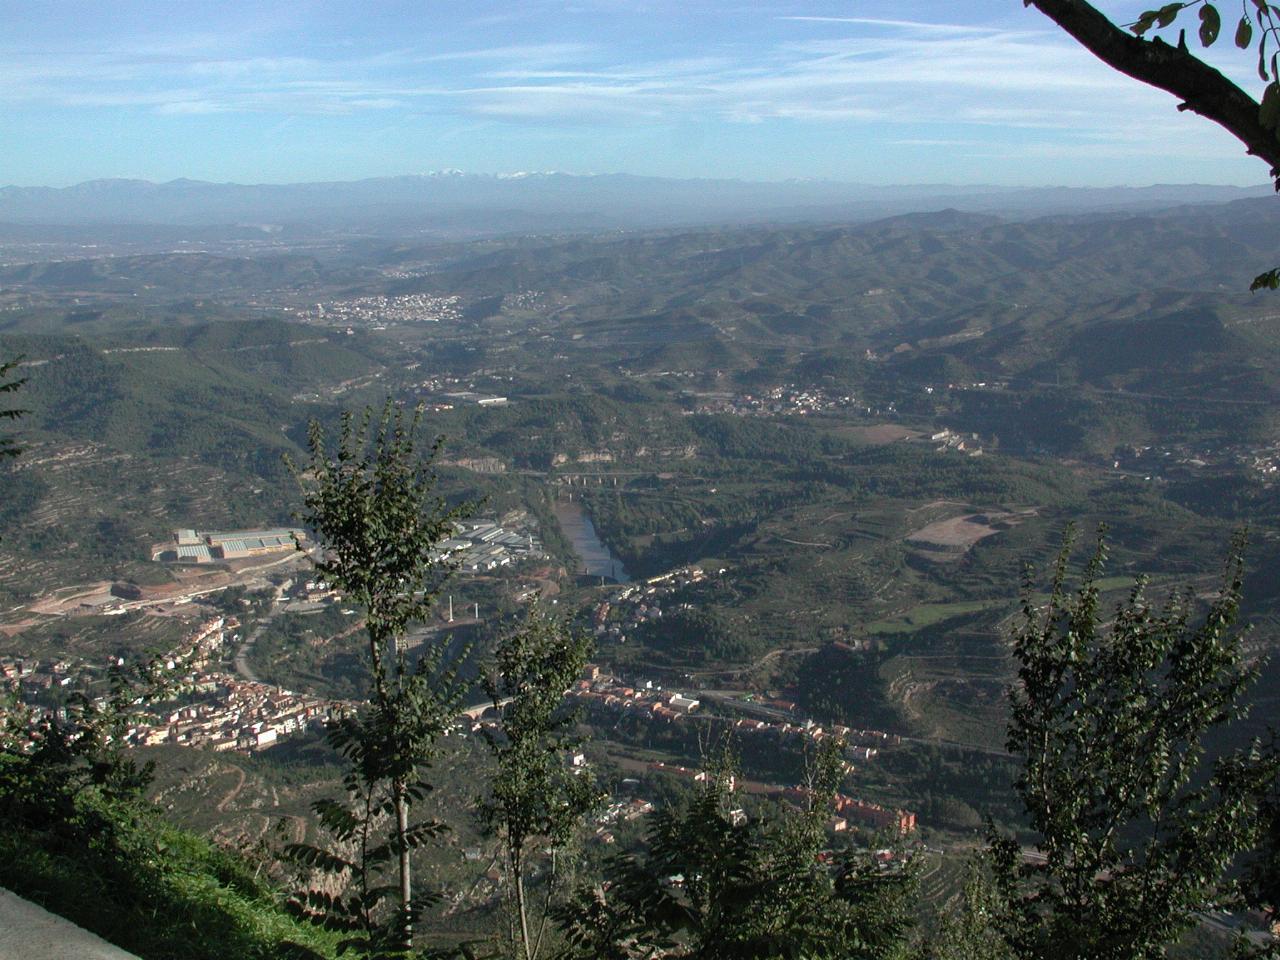 View from Montserrat